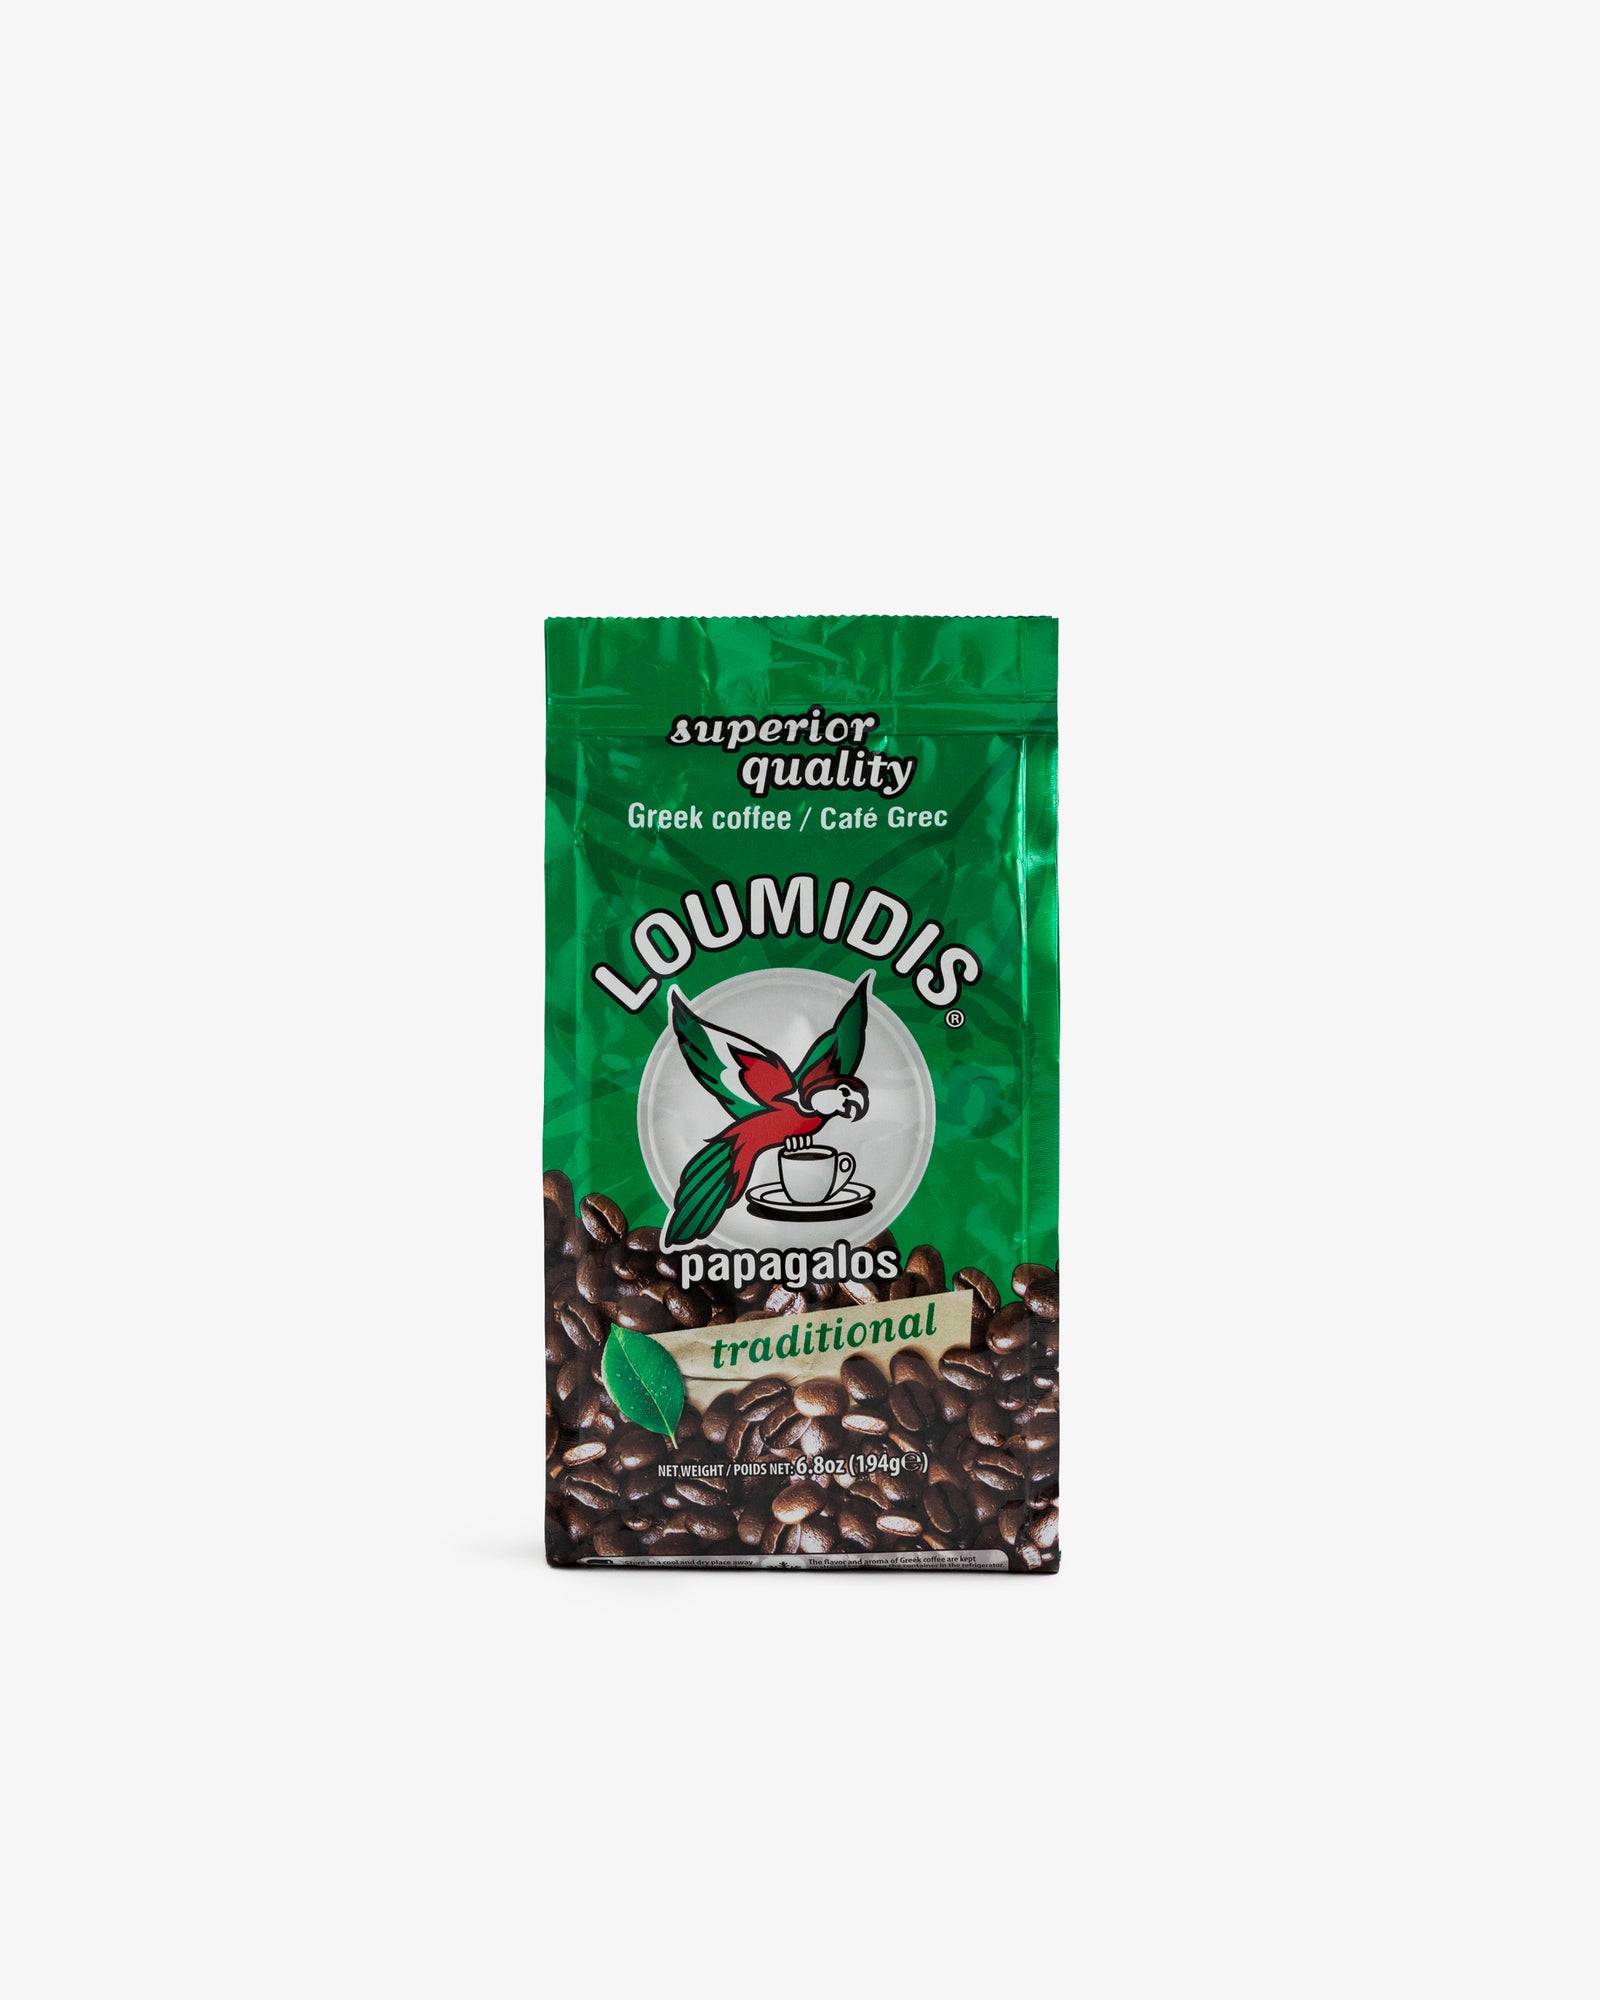 Loumidis Greek Coffee 6.8 oz bag